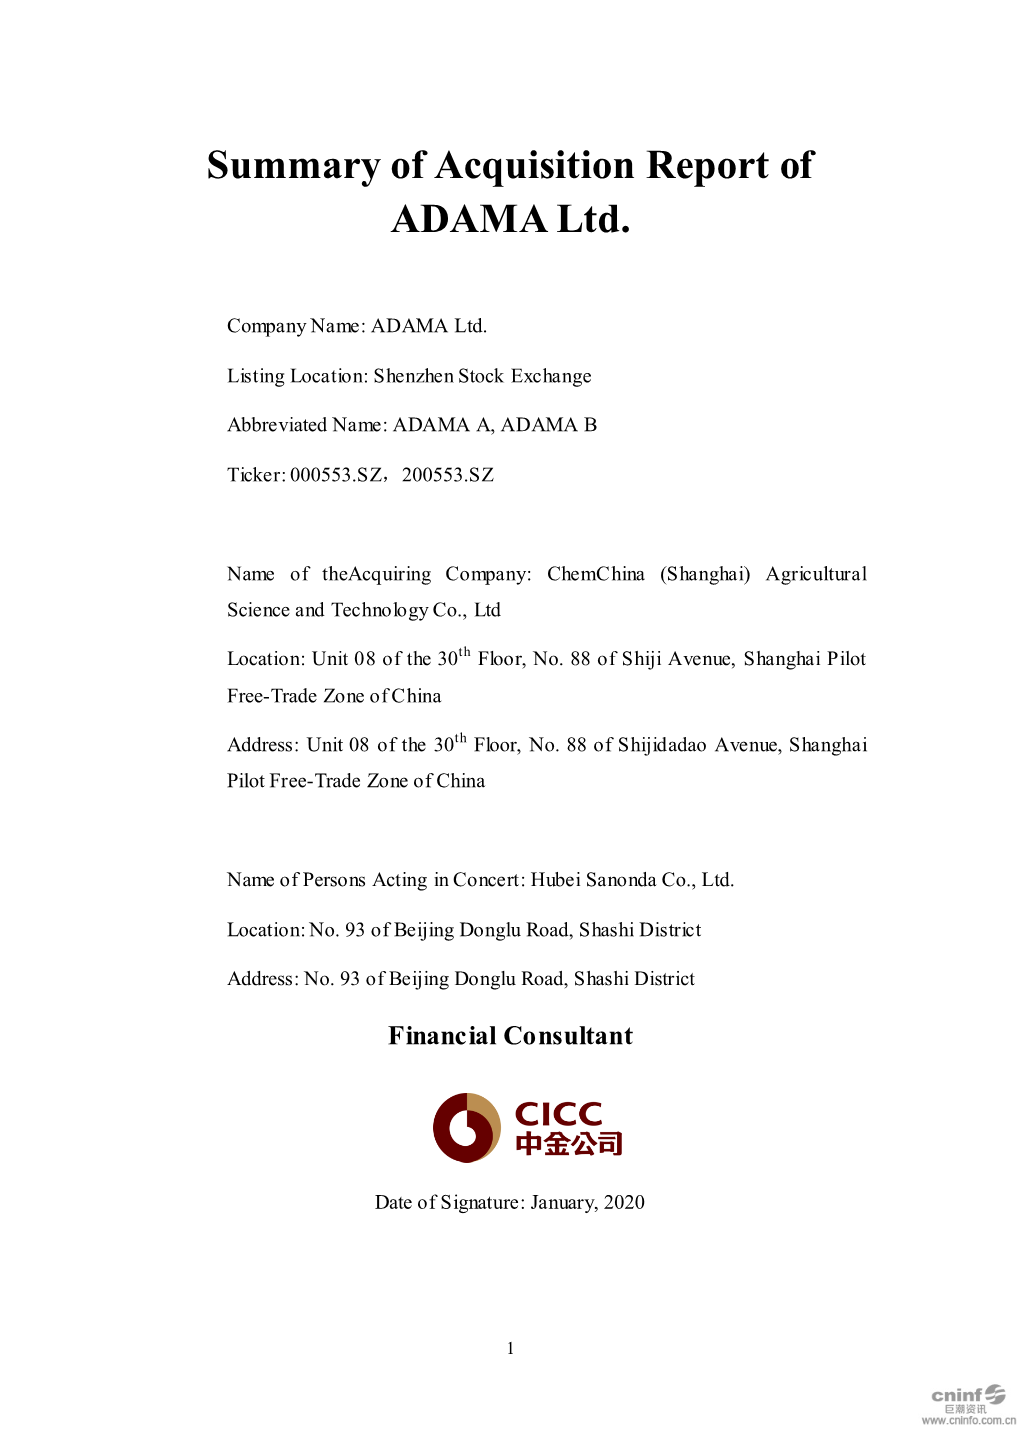 Summary of Acquisition Report of ADAMA Ltd